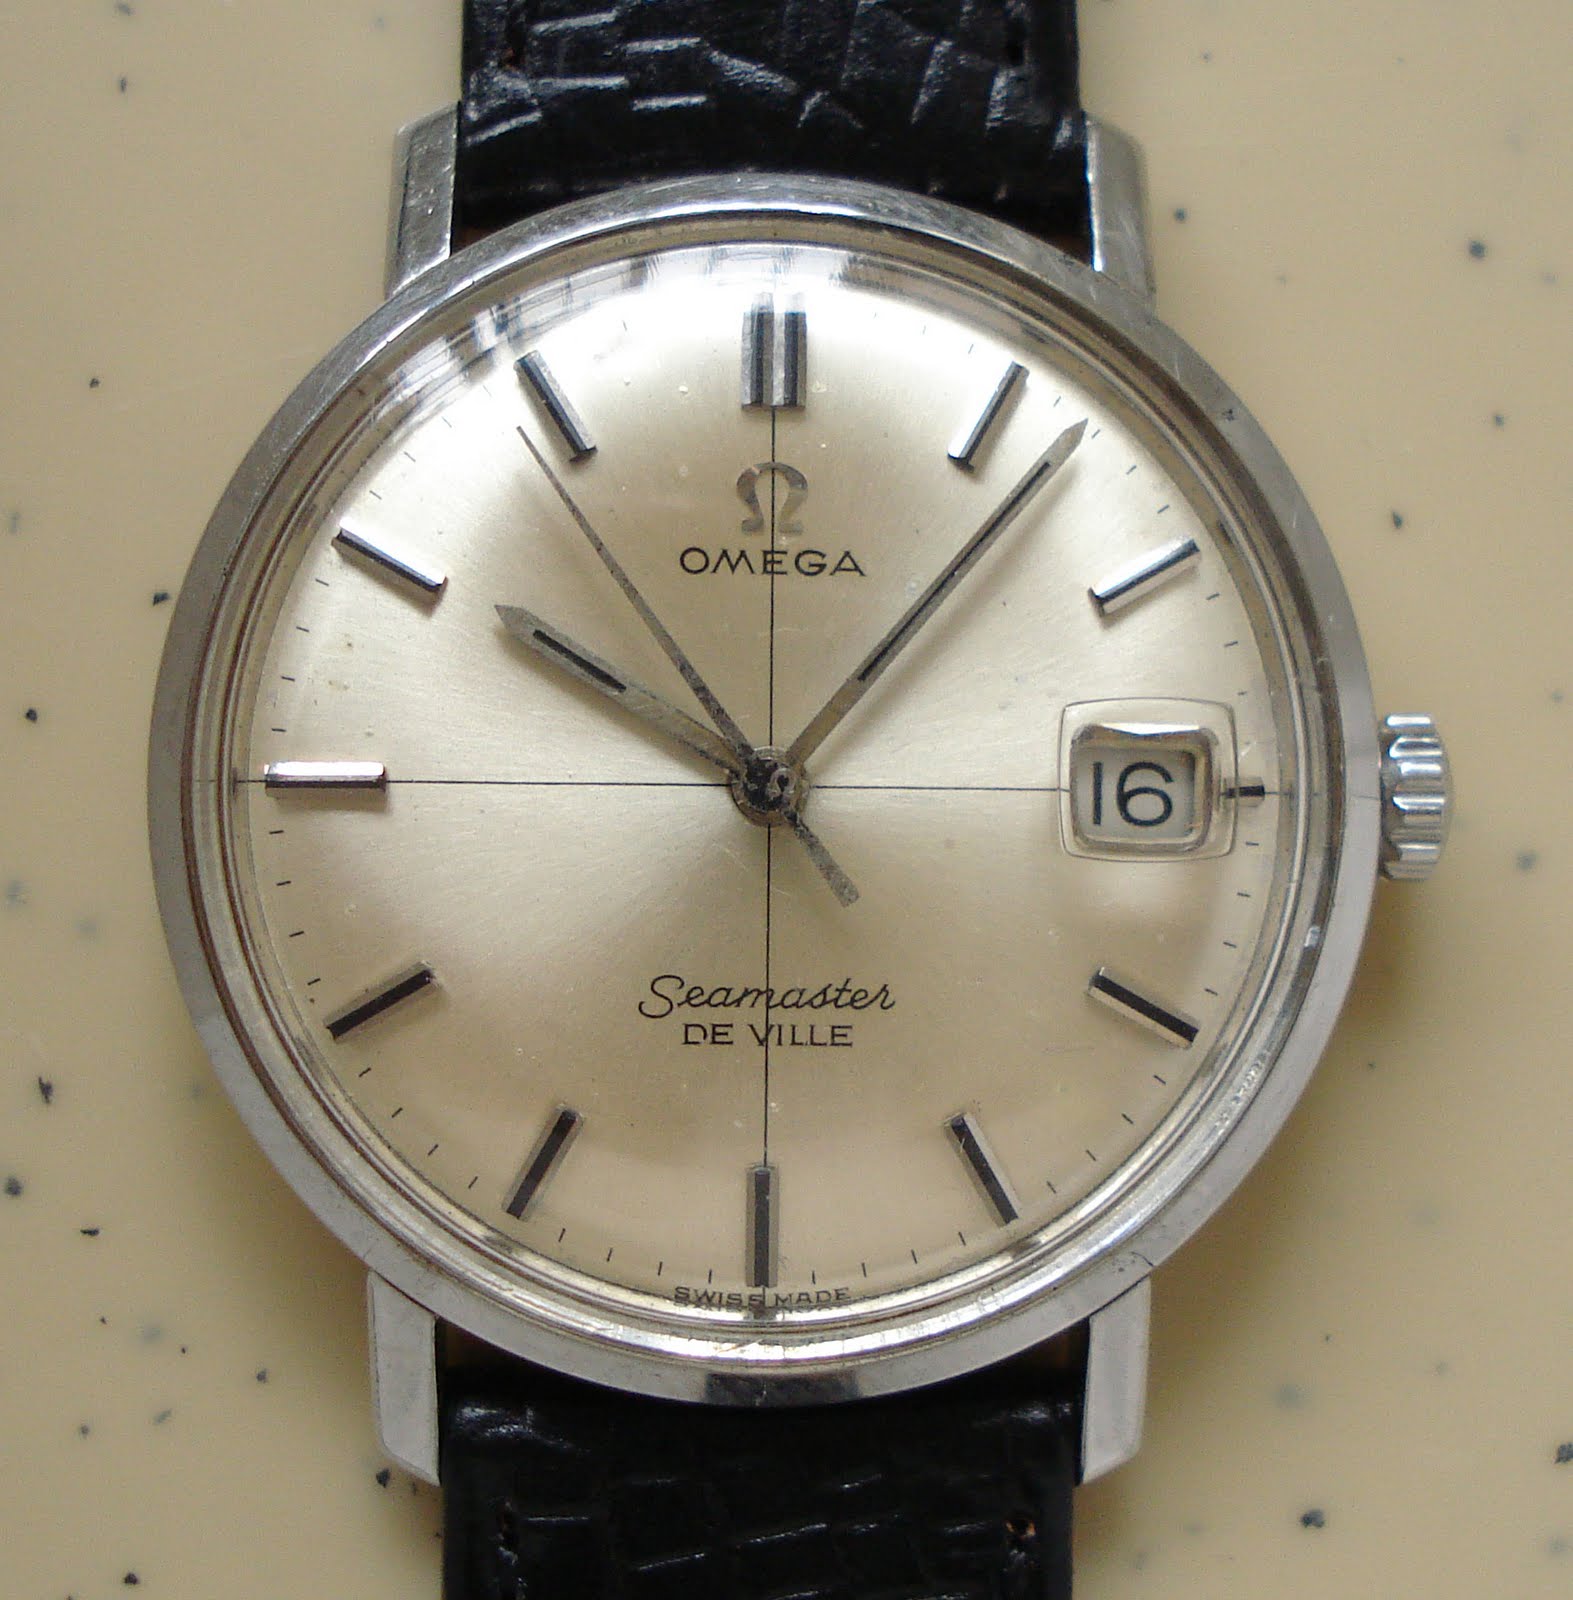 this vintage omega seamaster de ville manual winding caliber 610 watch ...